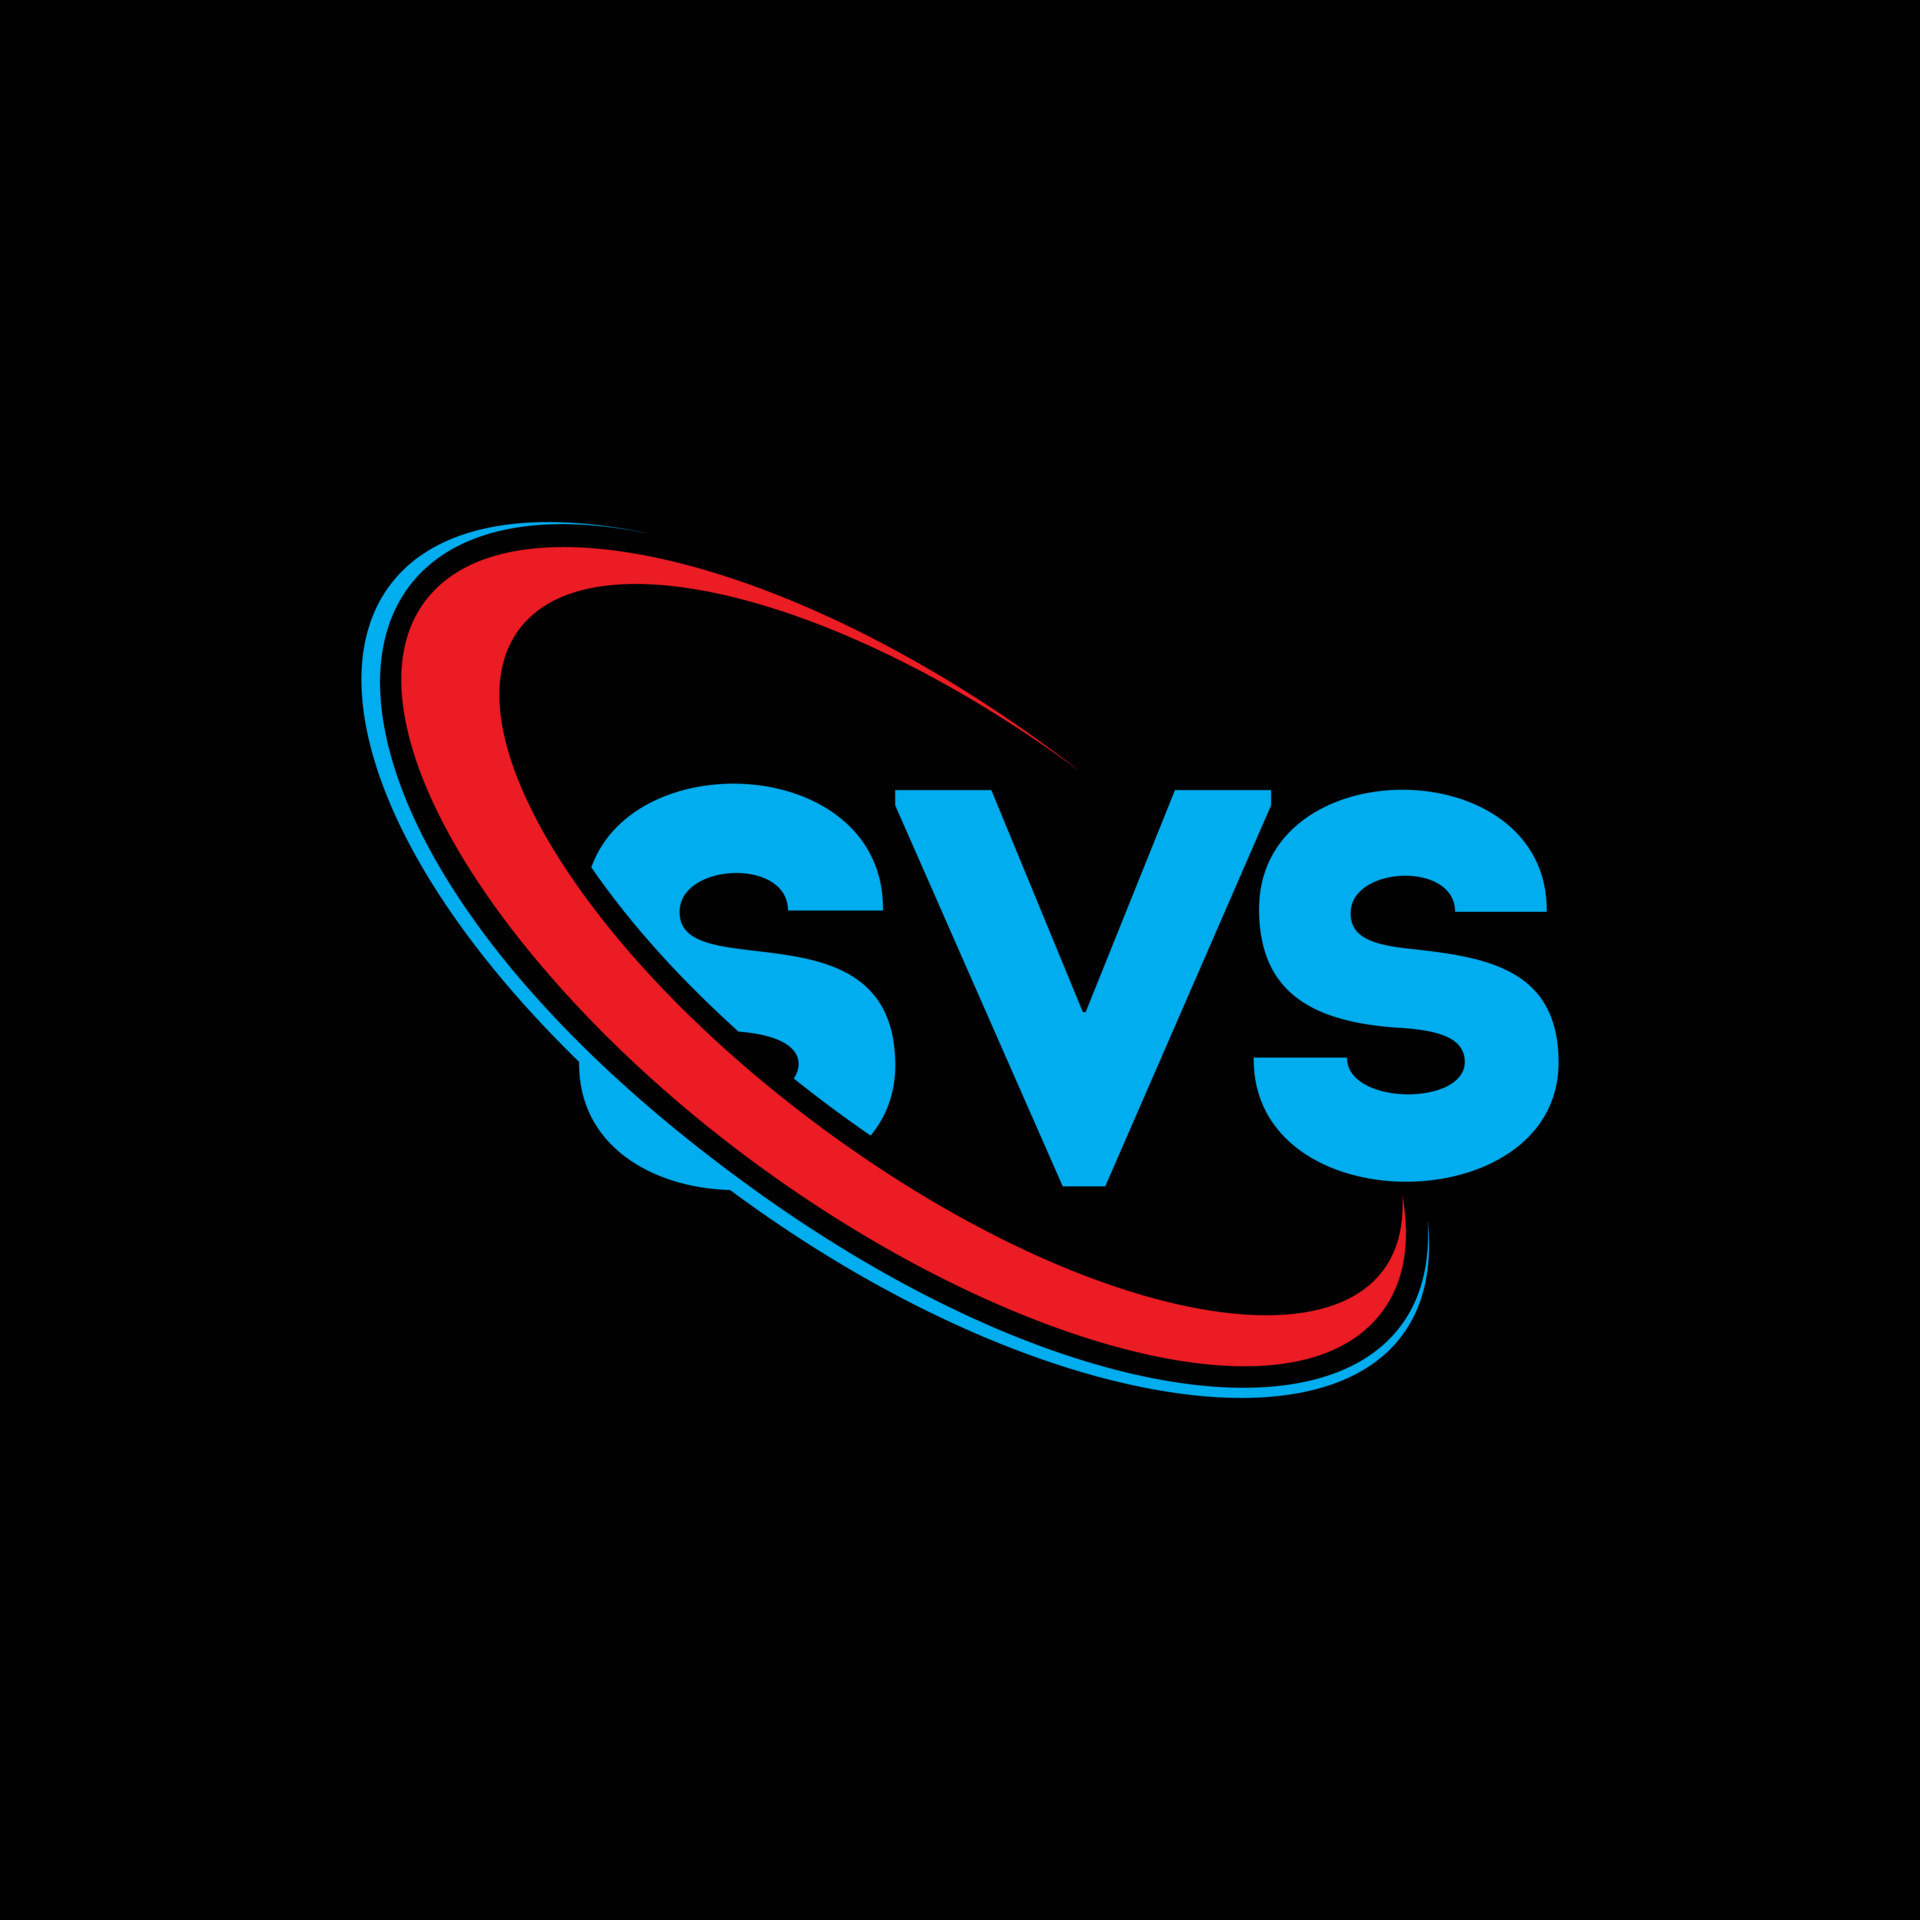 File:Svs logo.jpg - Wikimedia Commons